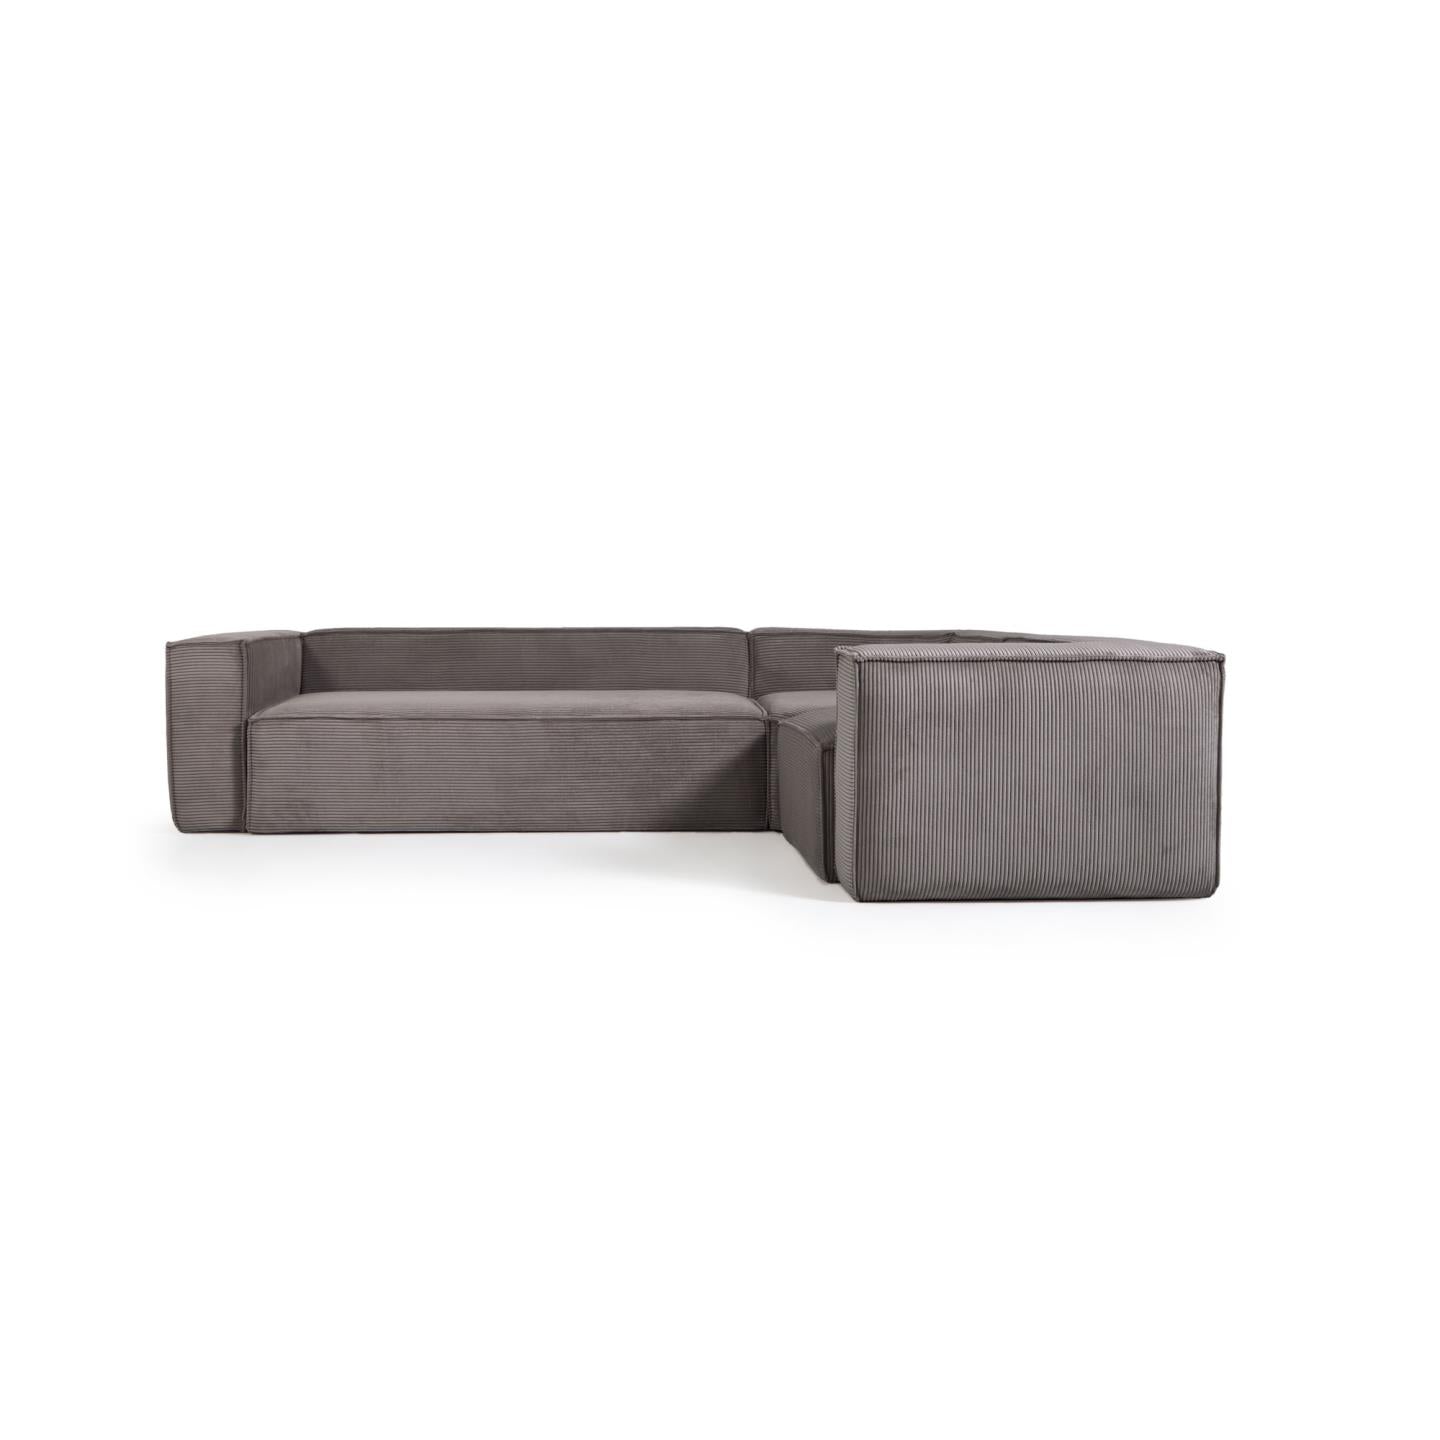 Blok 4 seater corner sofa in grey corduroy, 320 x 230 cm / 230 x 320 cm